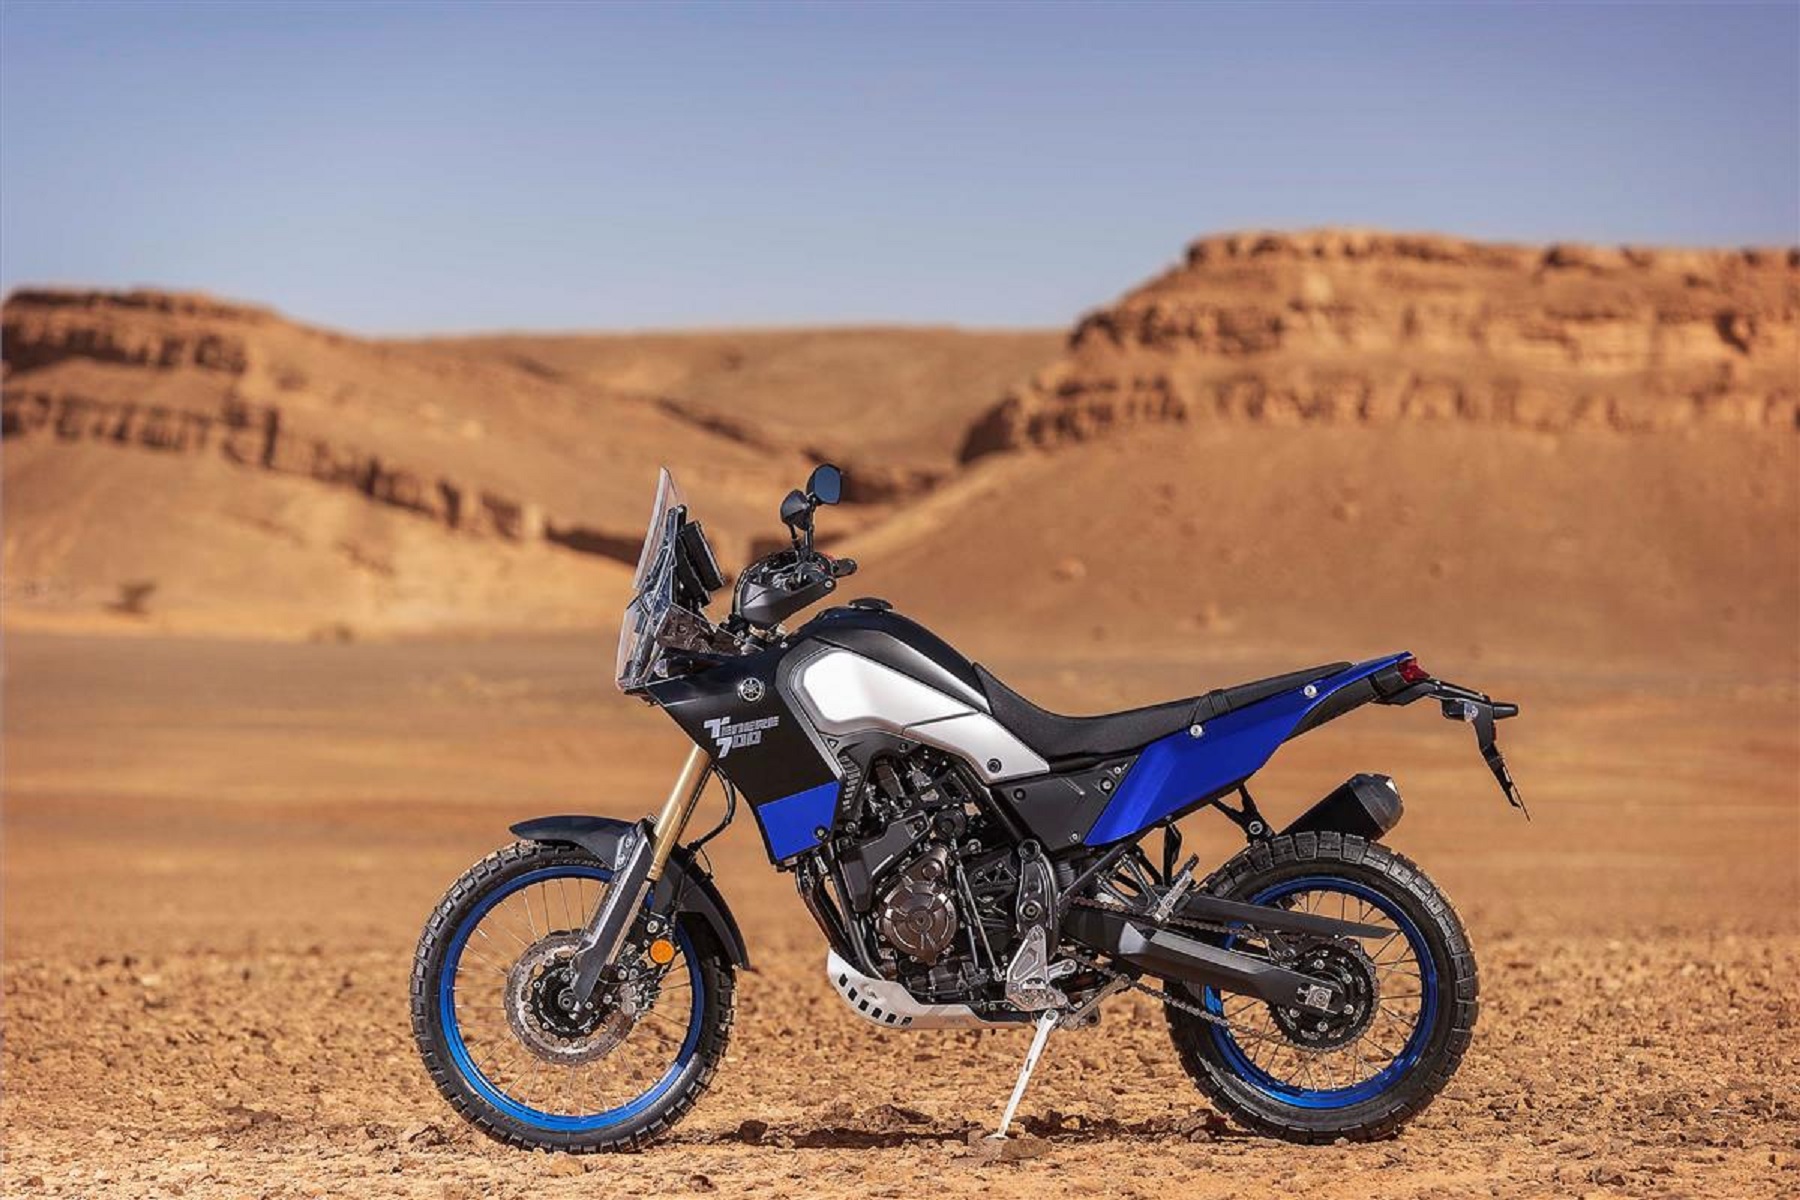 A blue 2021 Yamaha Ténéré 700 by the desert landscape